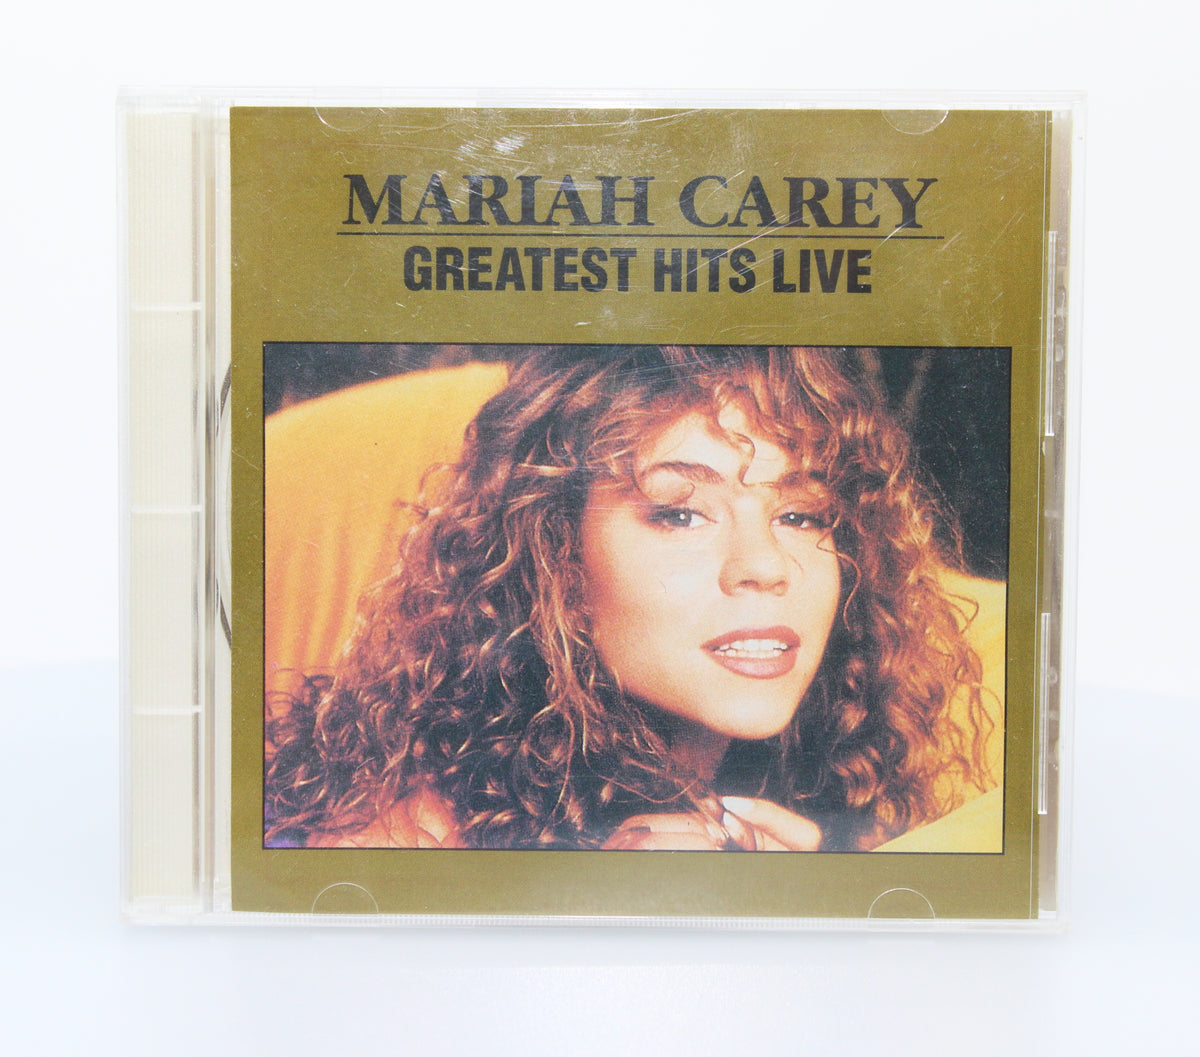 Mariah Carey, Dreamlover, CD Bootleg, Australia (CD 593)